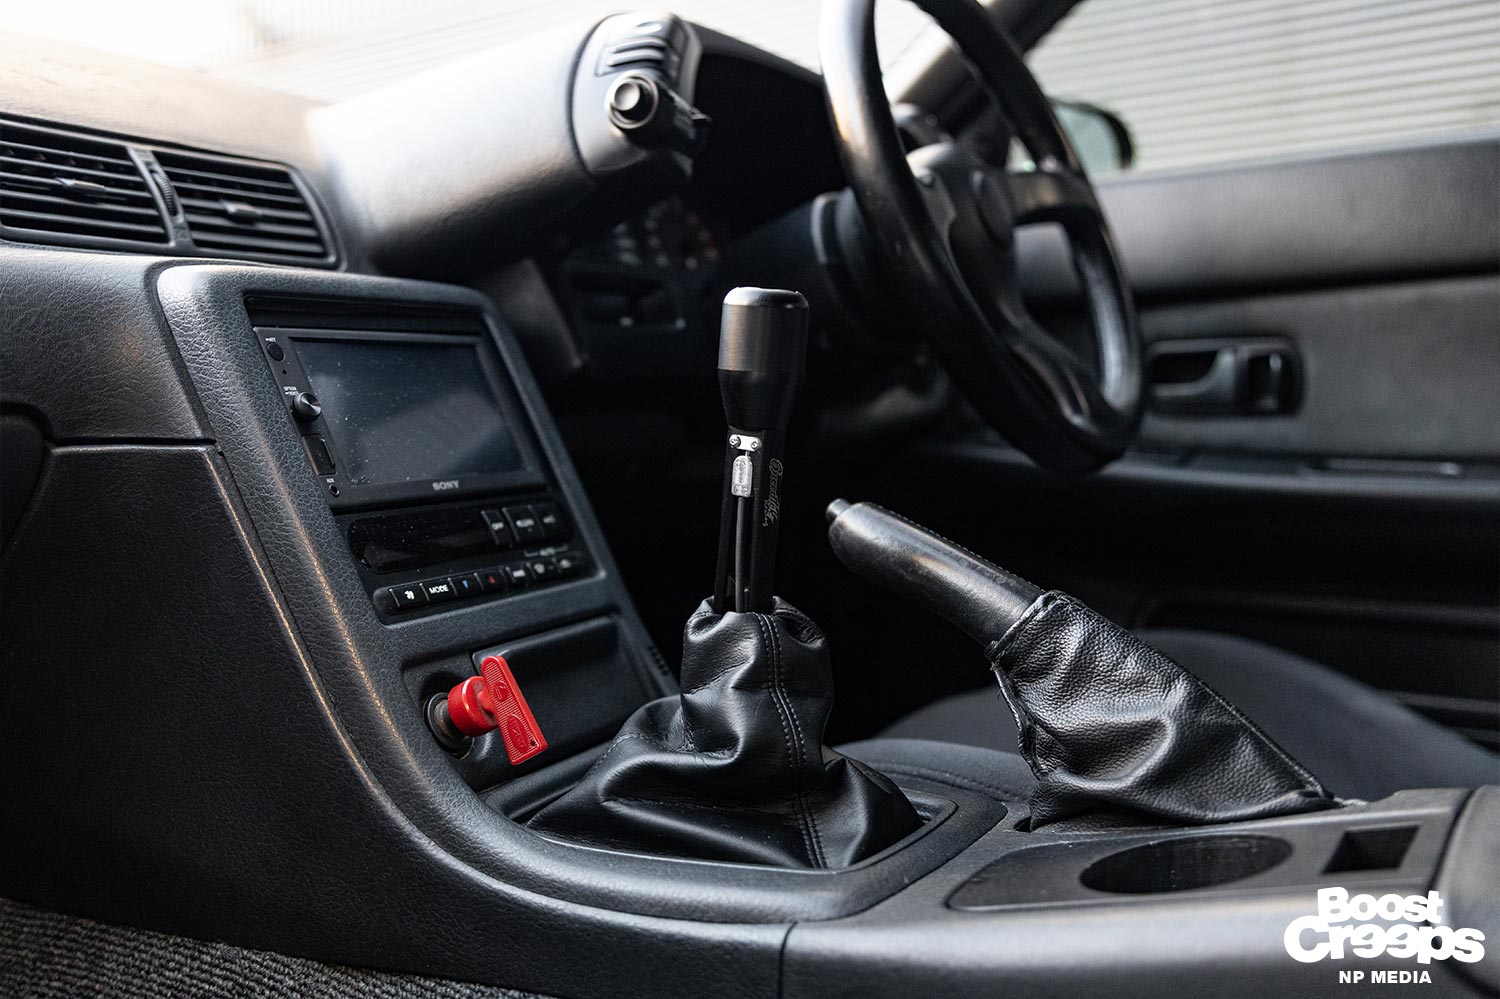 Clean Skyline R32 GTR interior